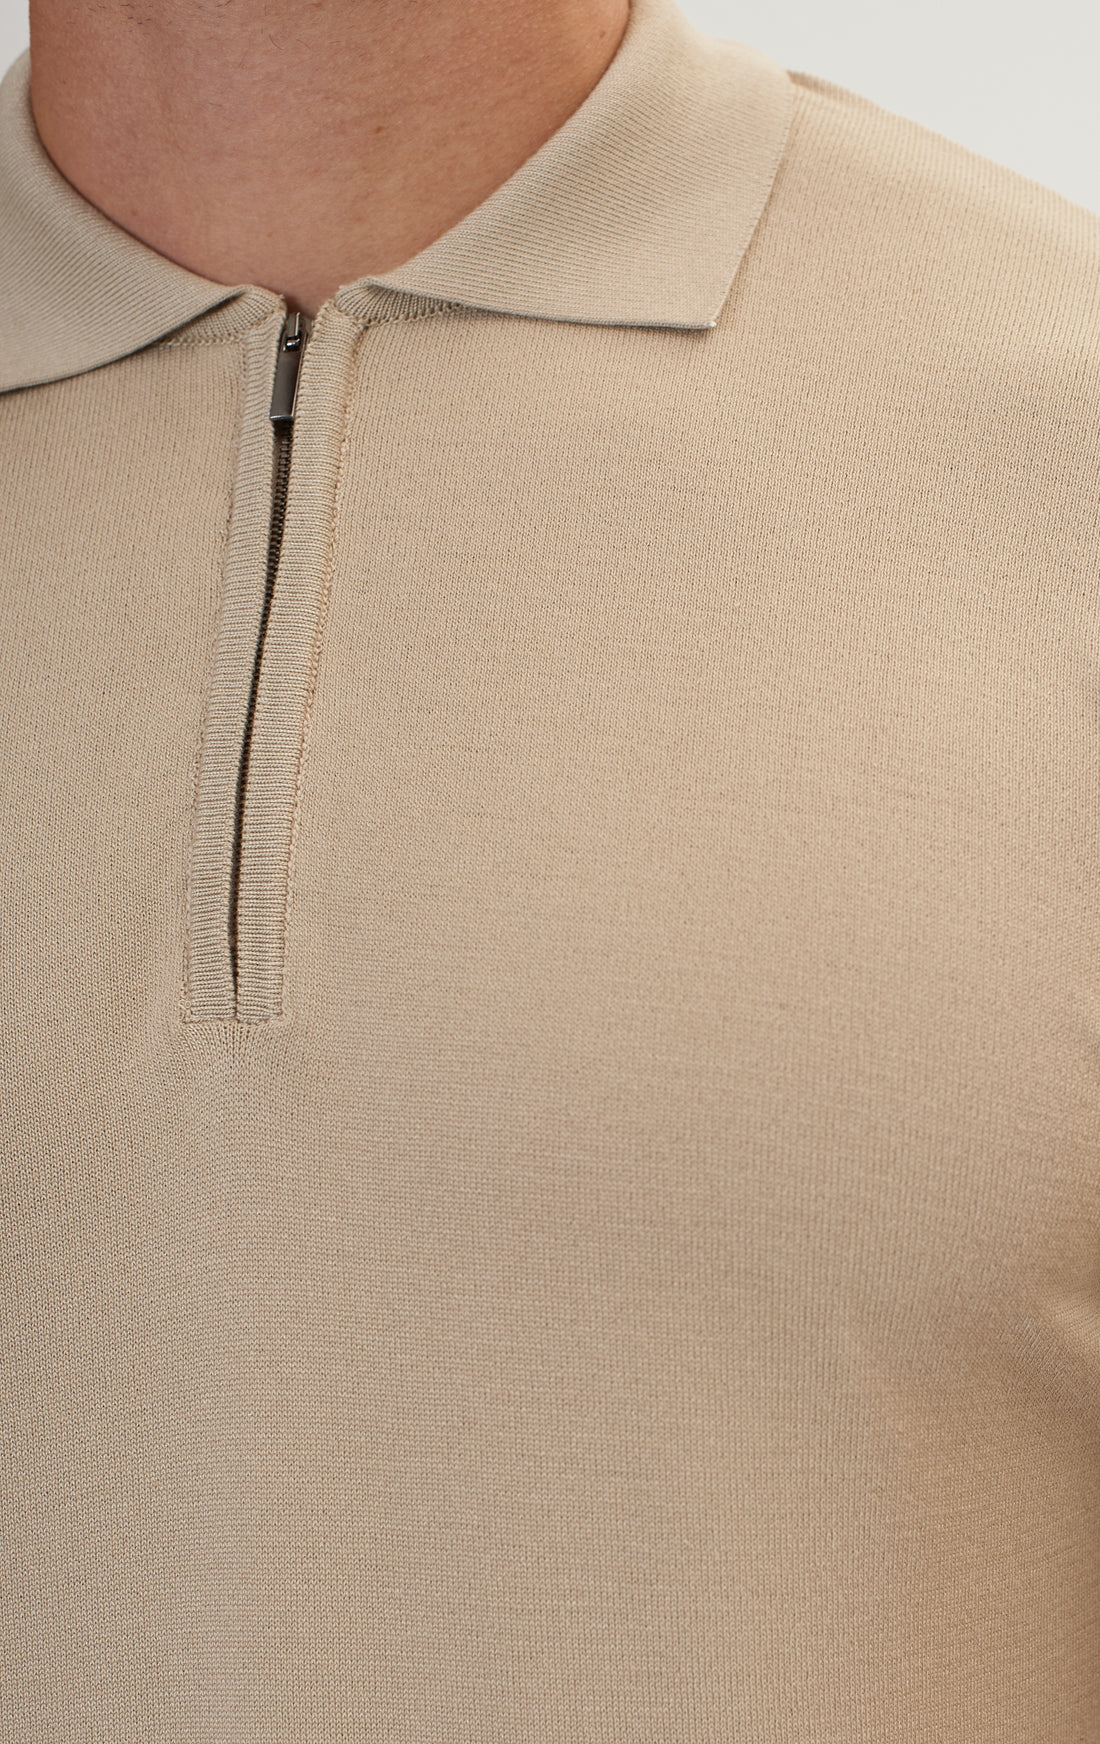 Zipper Closure Lightweight Polo Tee - Dark Beige